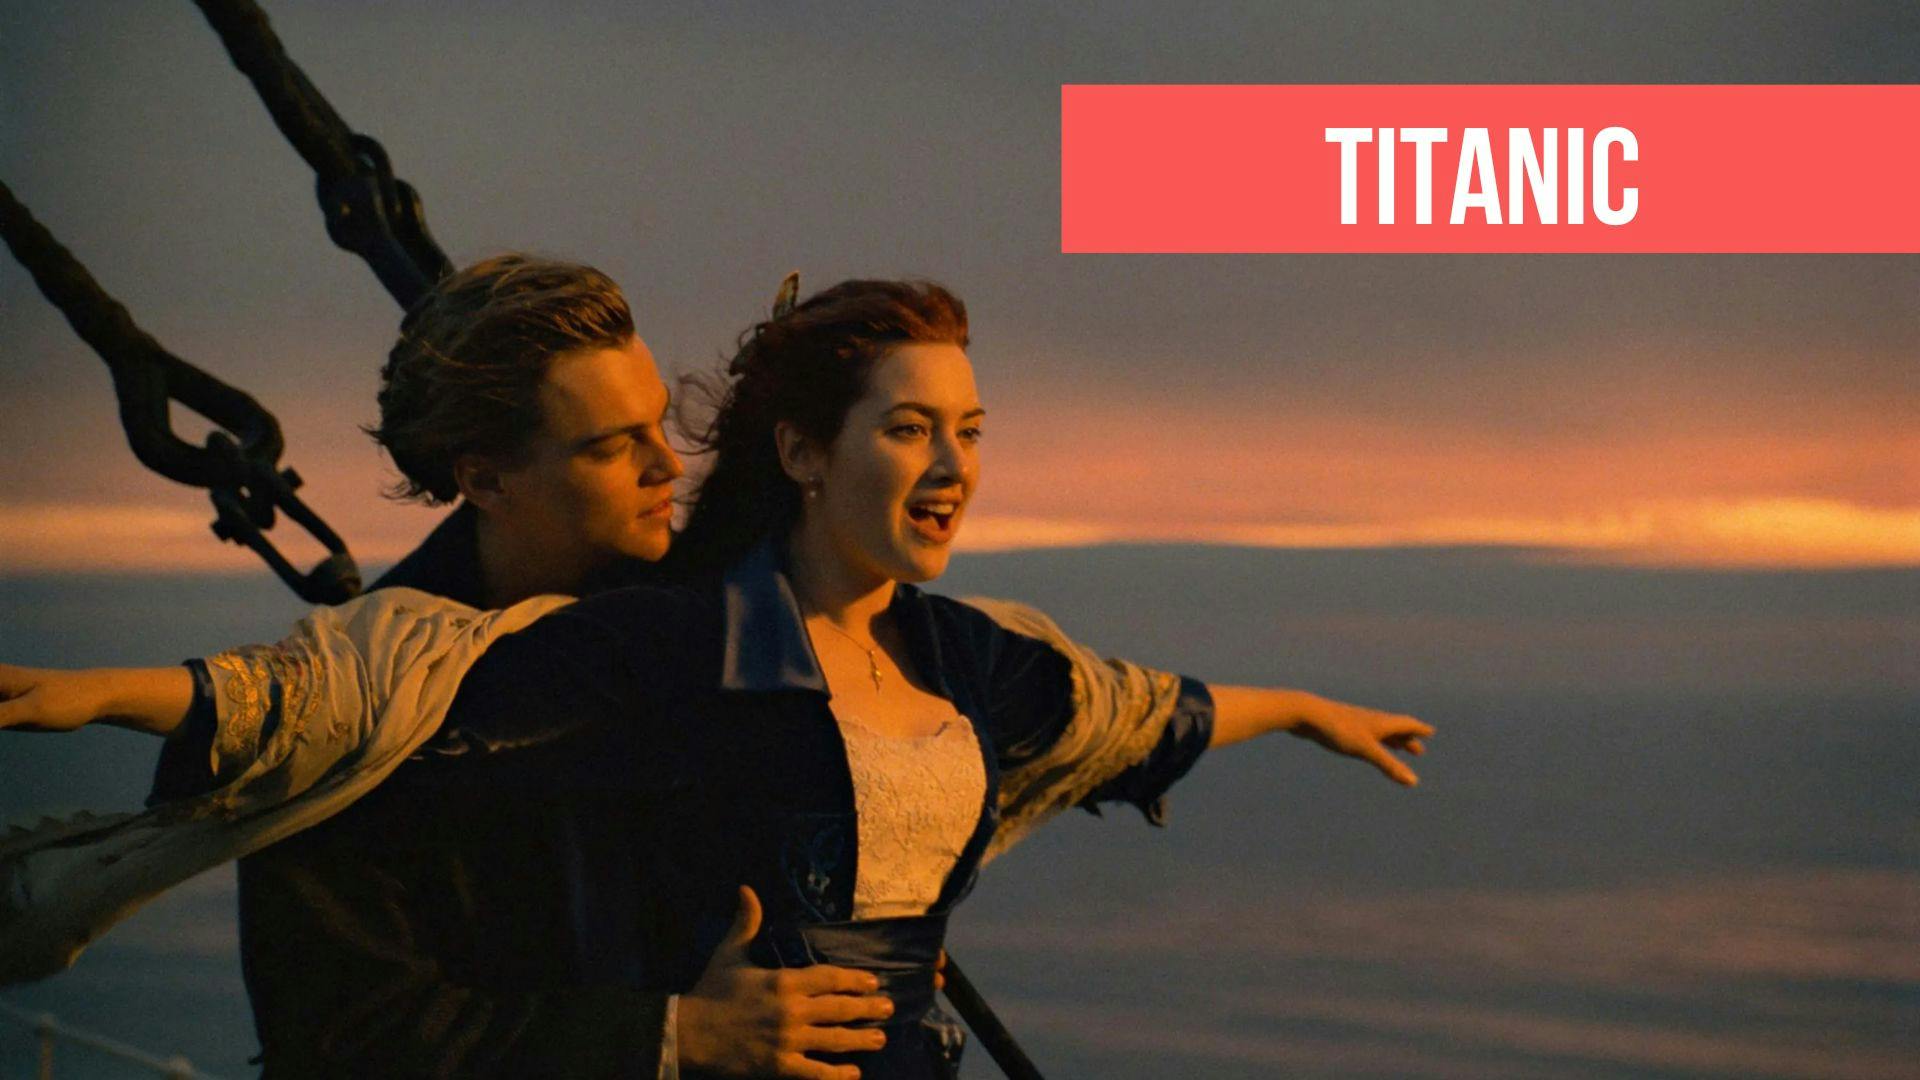 poster du film Titanic avec Kate Winslet et Leonardo Dicaprio + titre